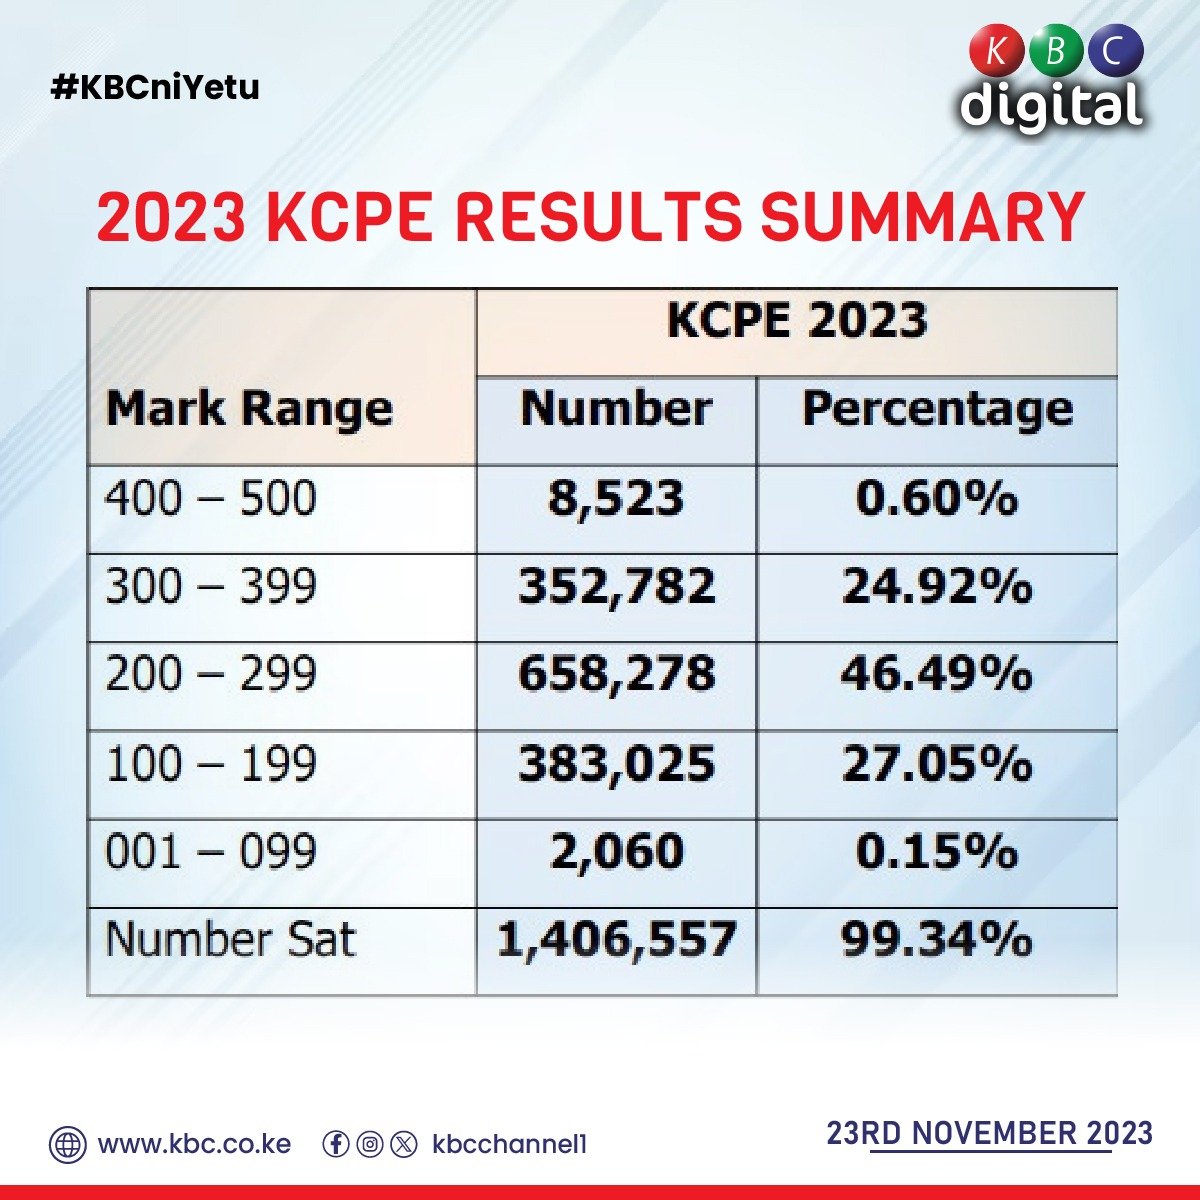 2023 KCPE RESULTS SUMMARY: #KBCniYetu ^RO